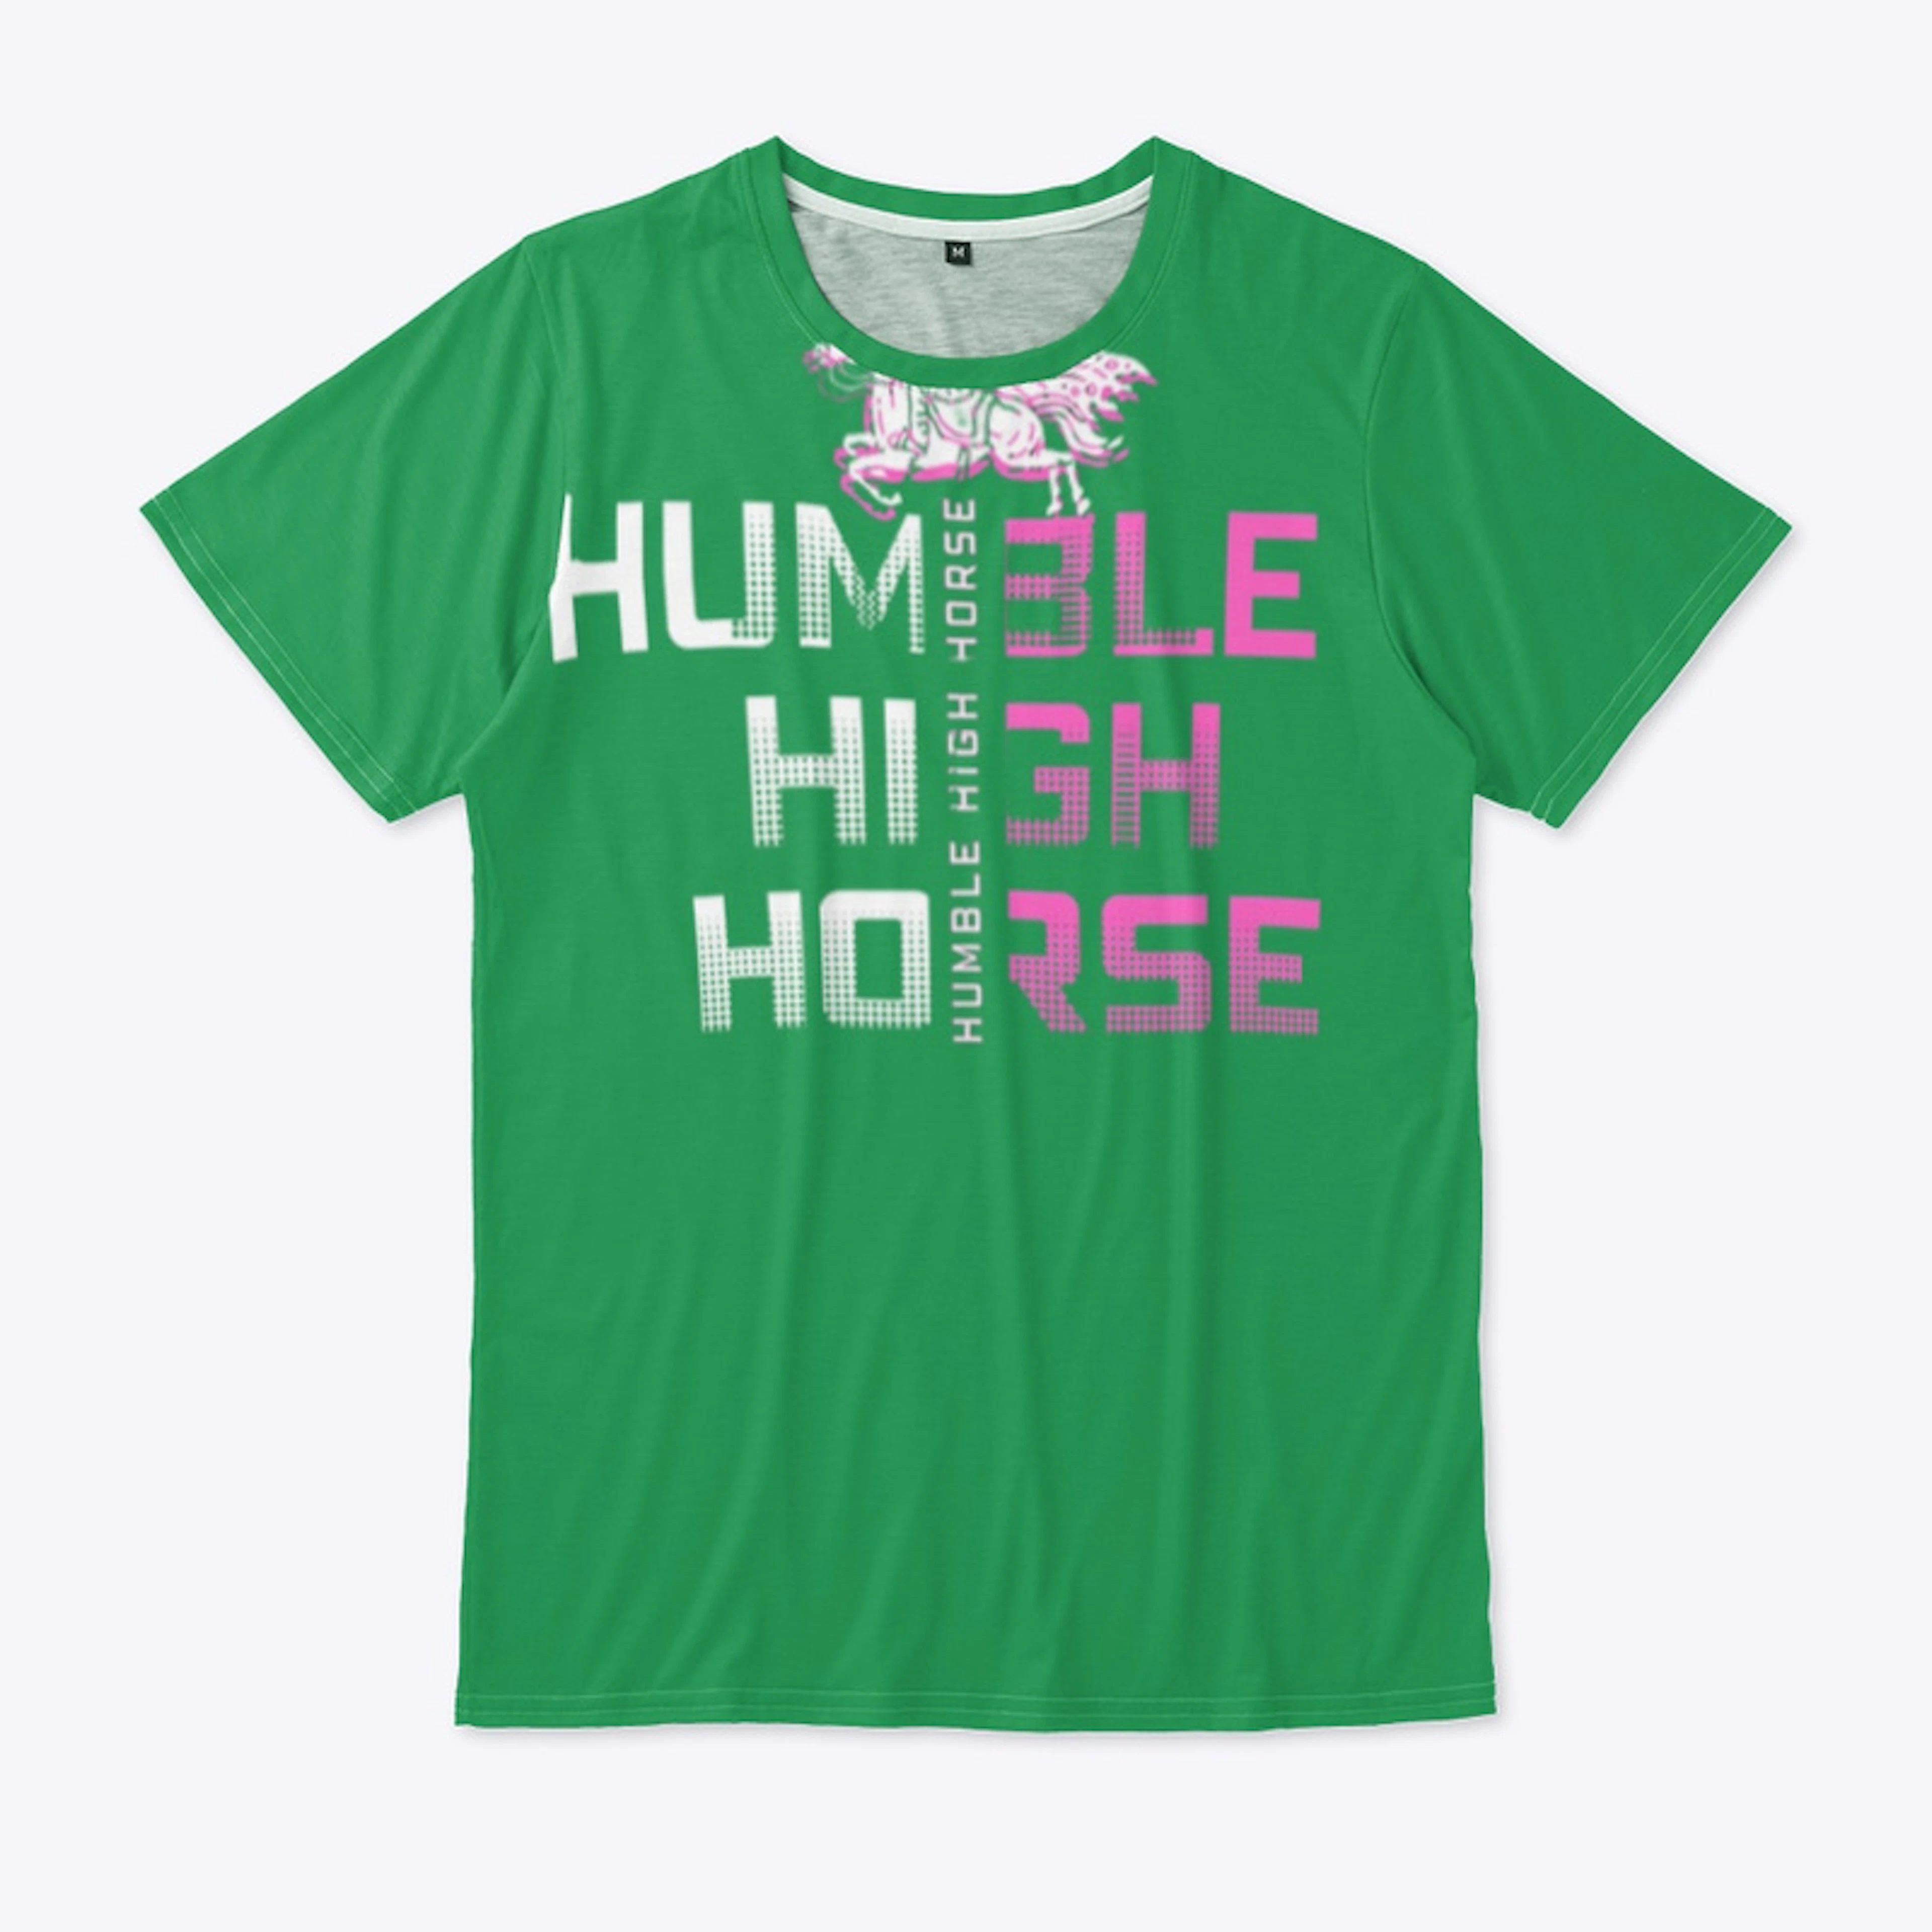 HHH Shirts 